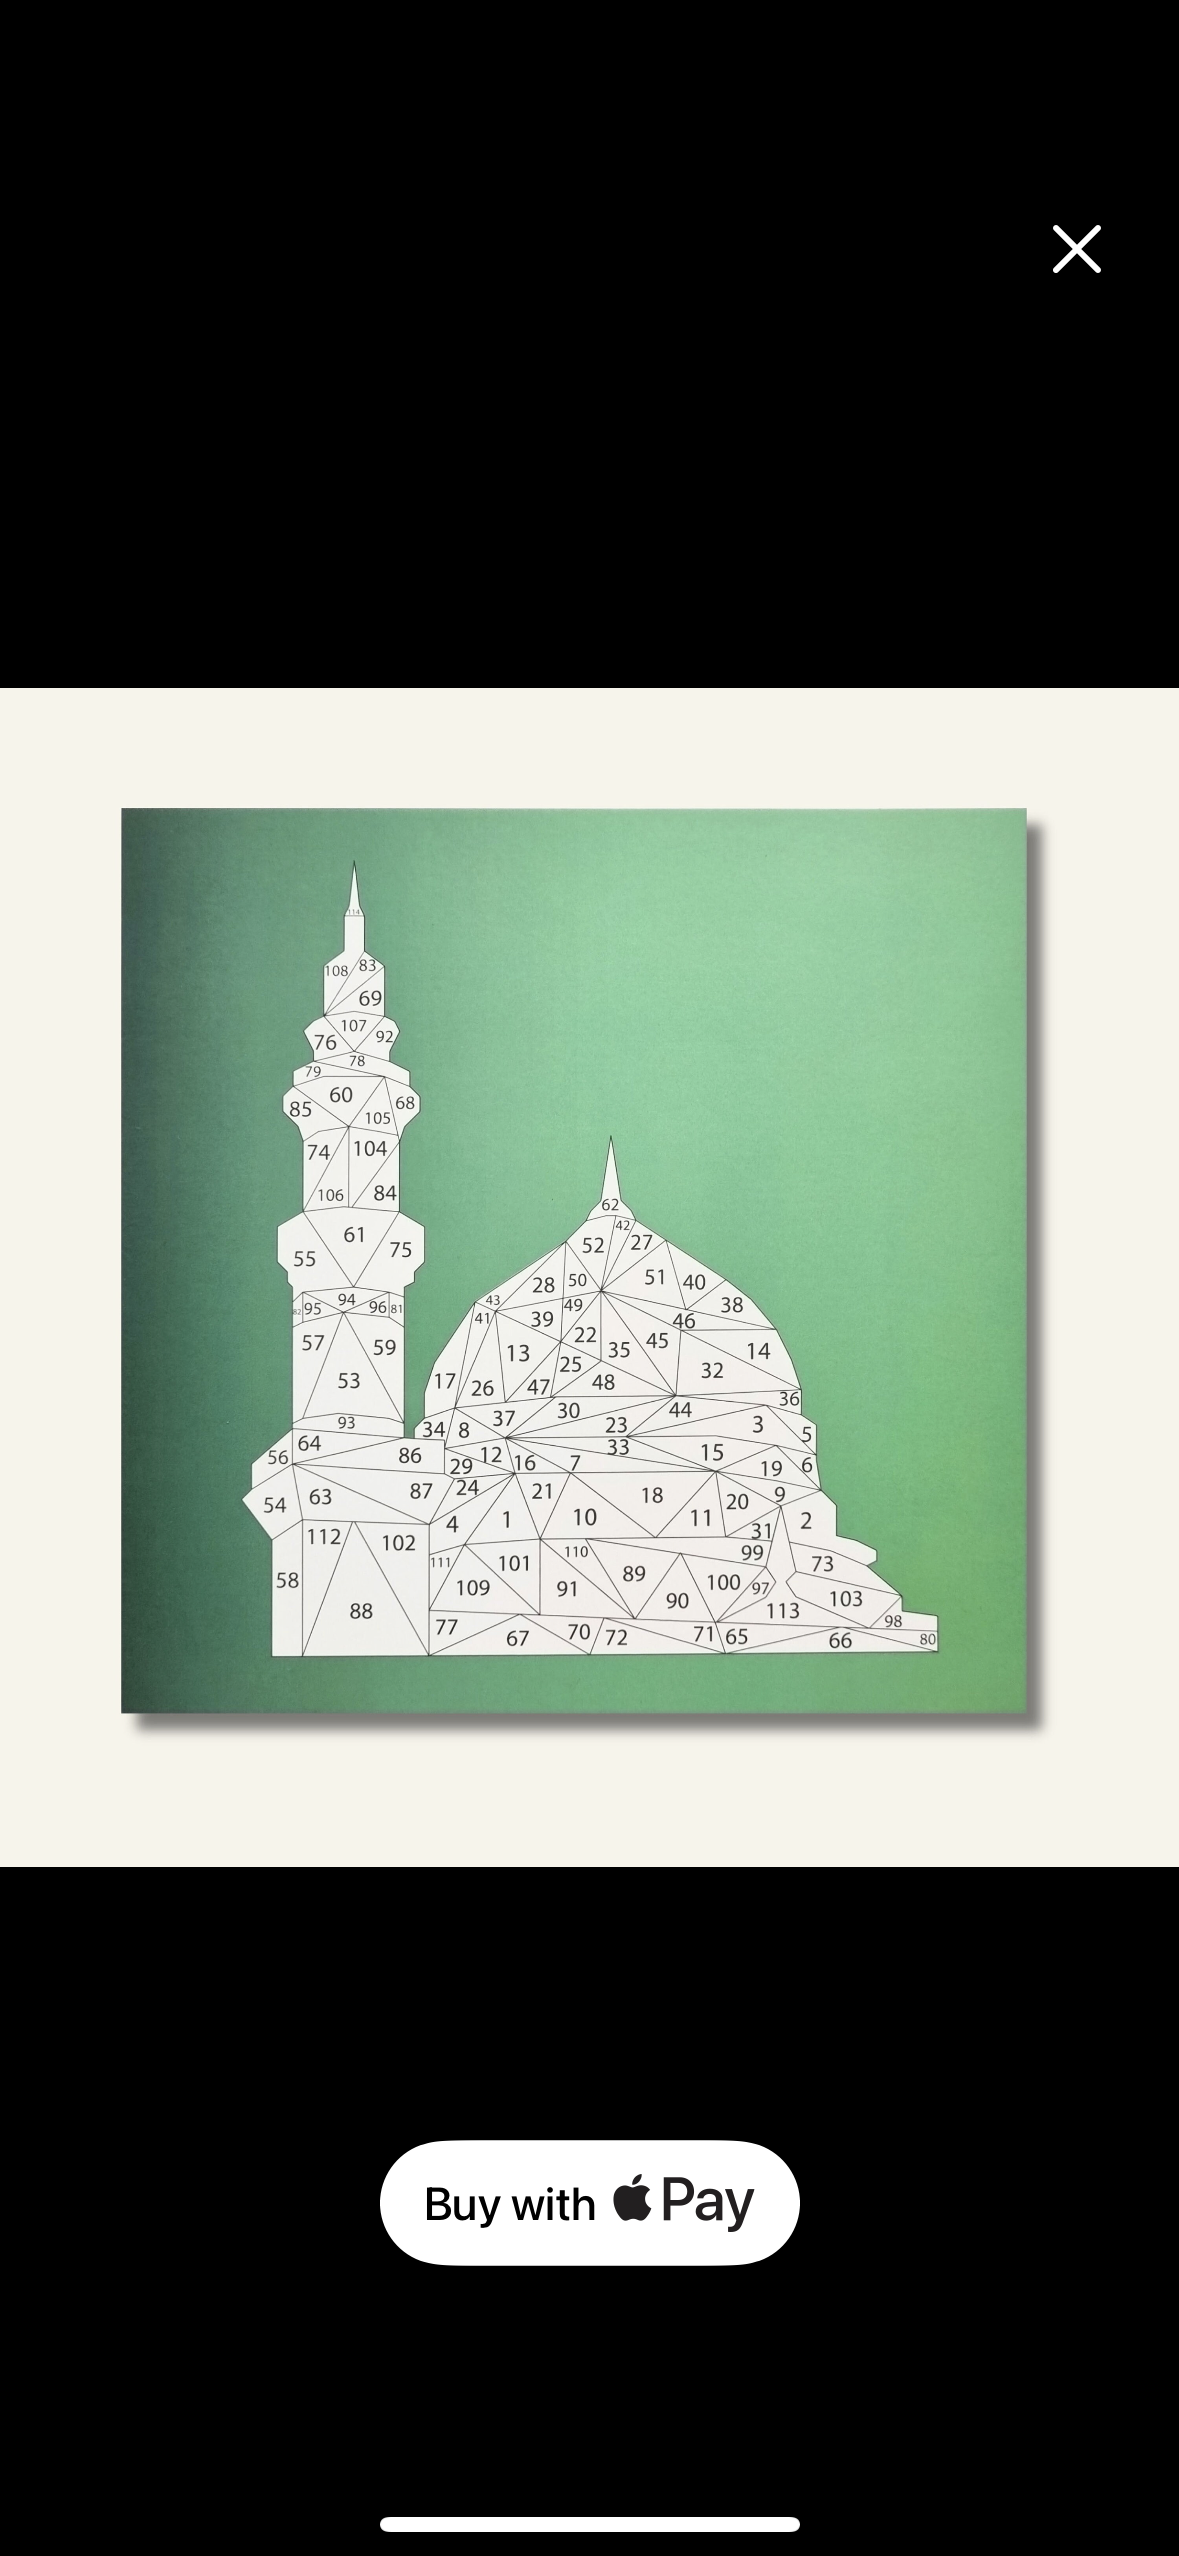 Stick by Number: Eid/Hajj Masjid-al-Nabwi, Ka’aba | Musk at Dusk